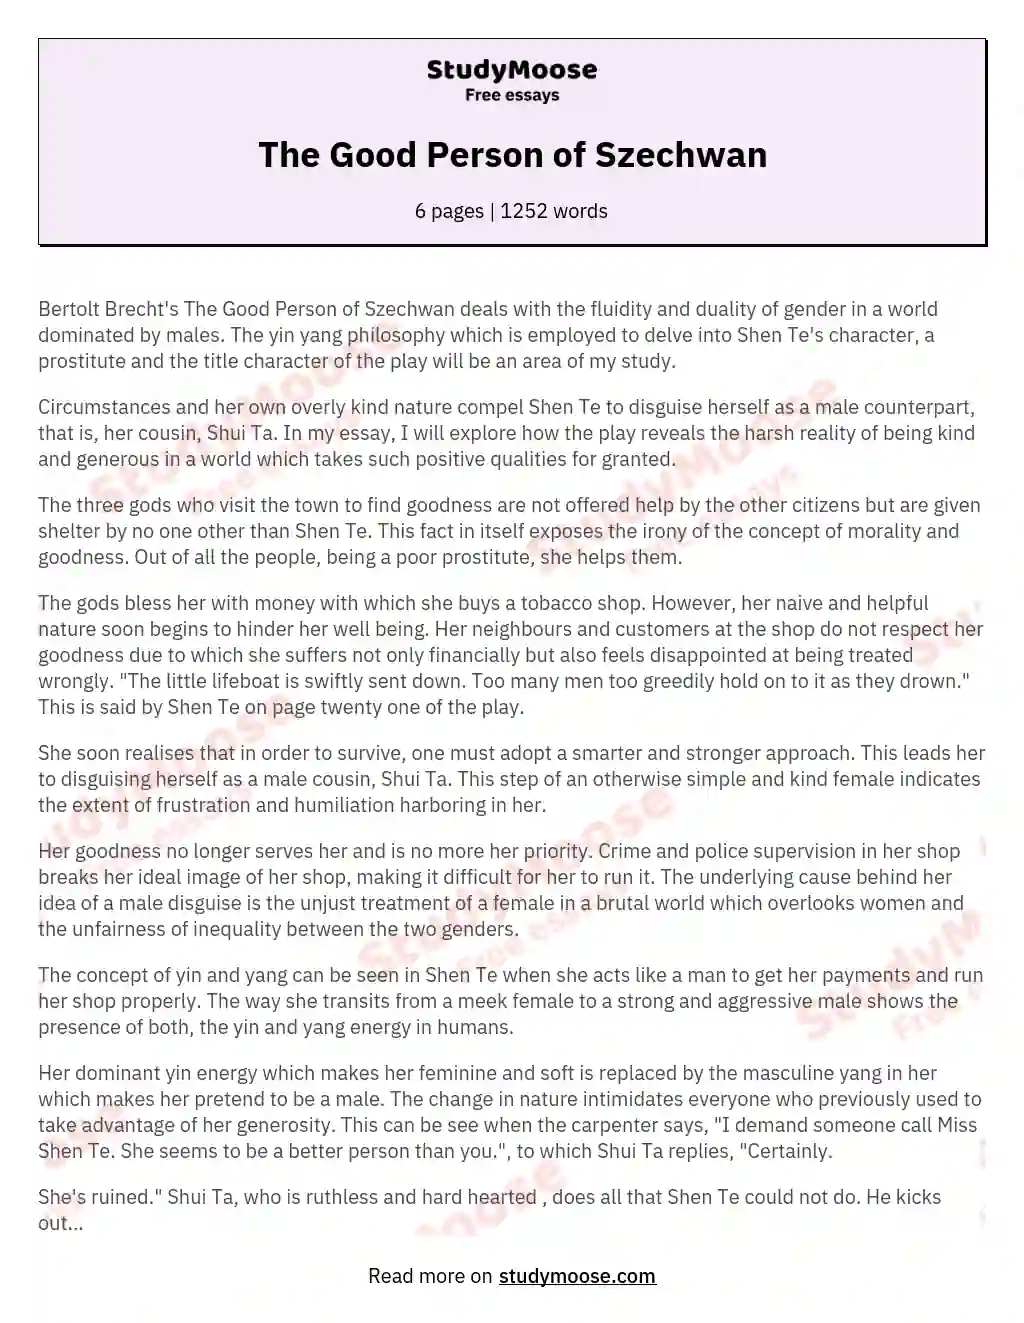 The Good Person of Szechwan essay